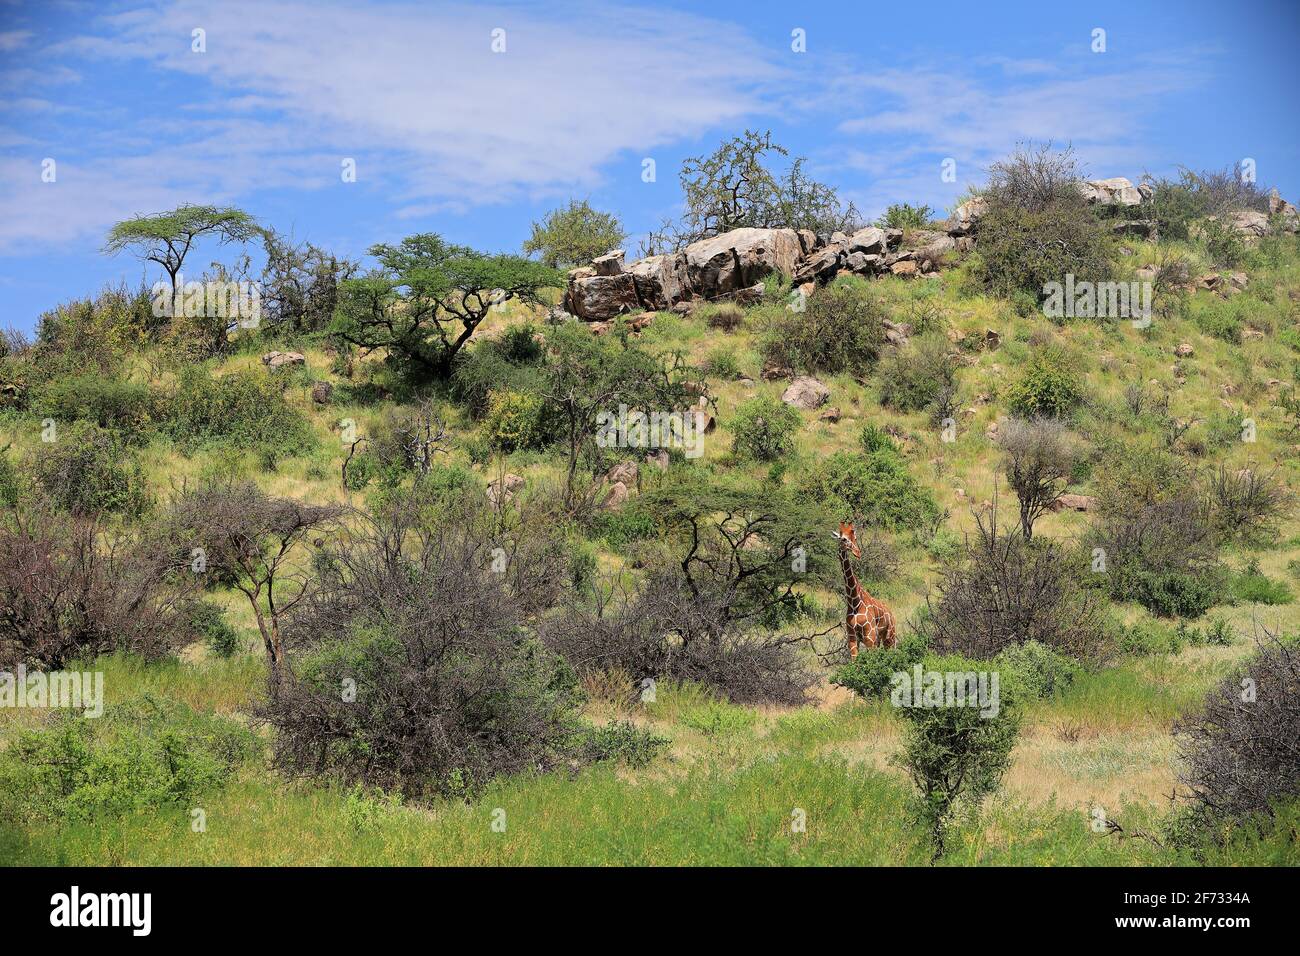 Reticulated giraffe (Giraffa reticulata), savannah, mountain, stones, Samburu National Reserve, Kenya Stock Photo